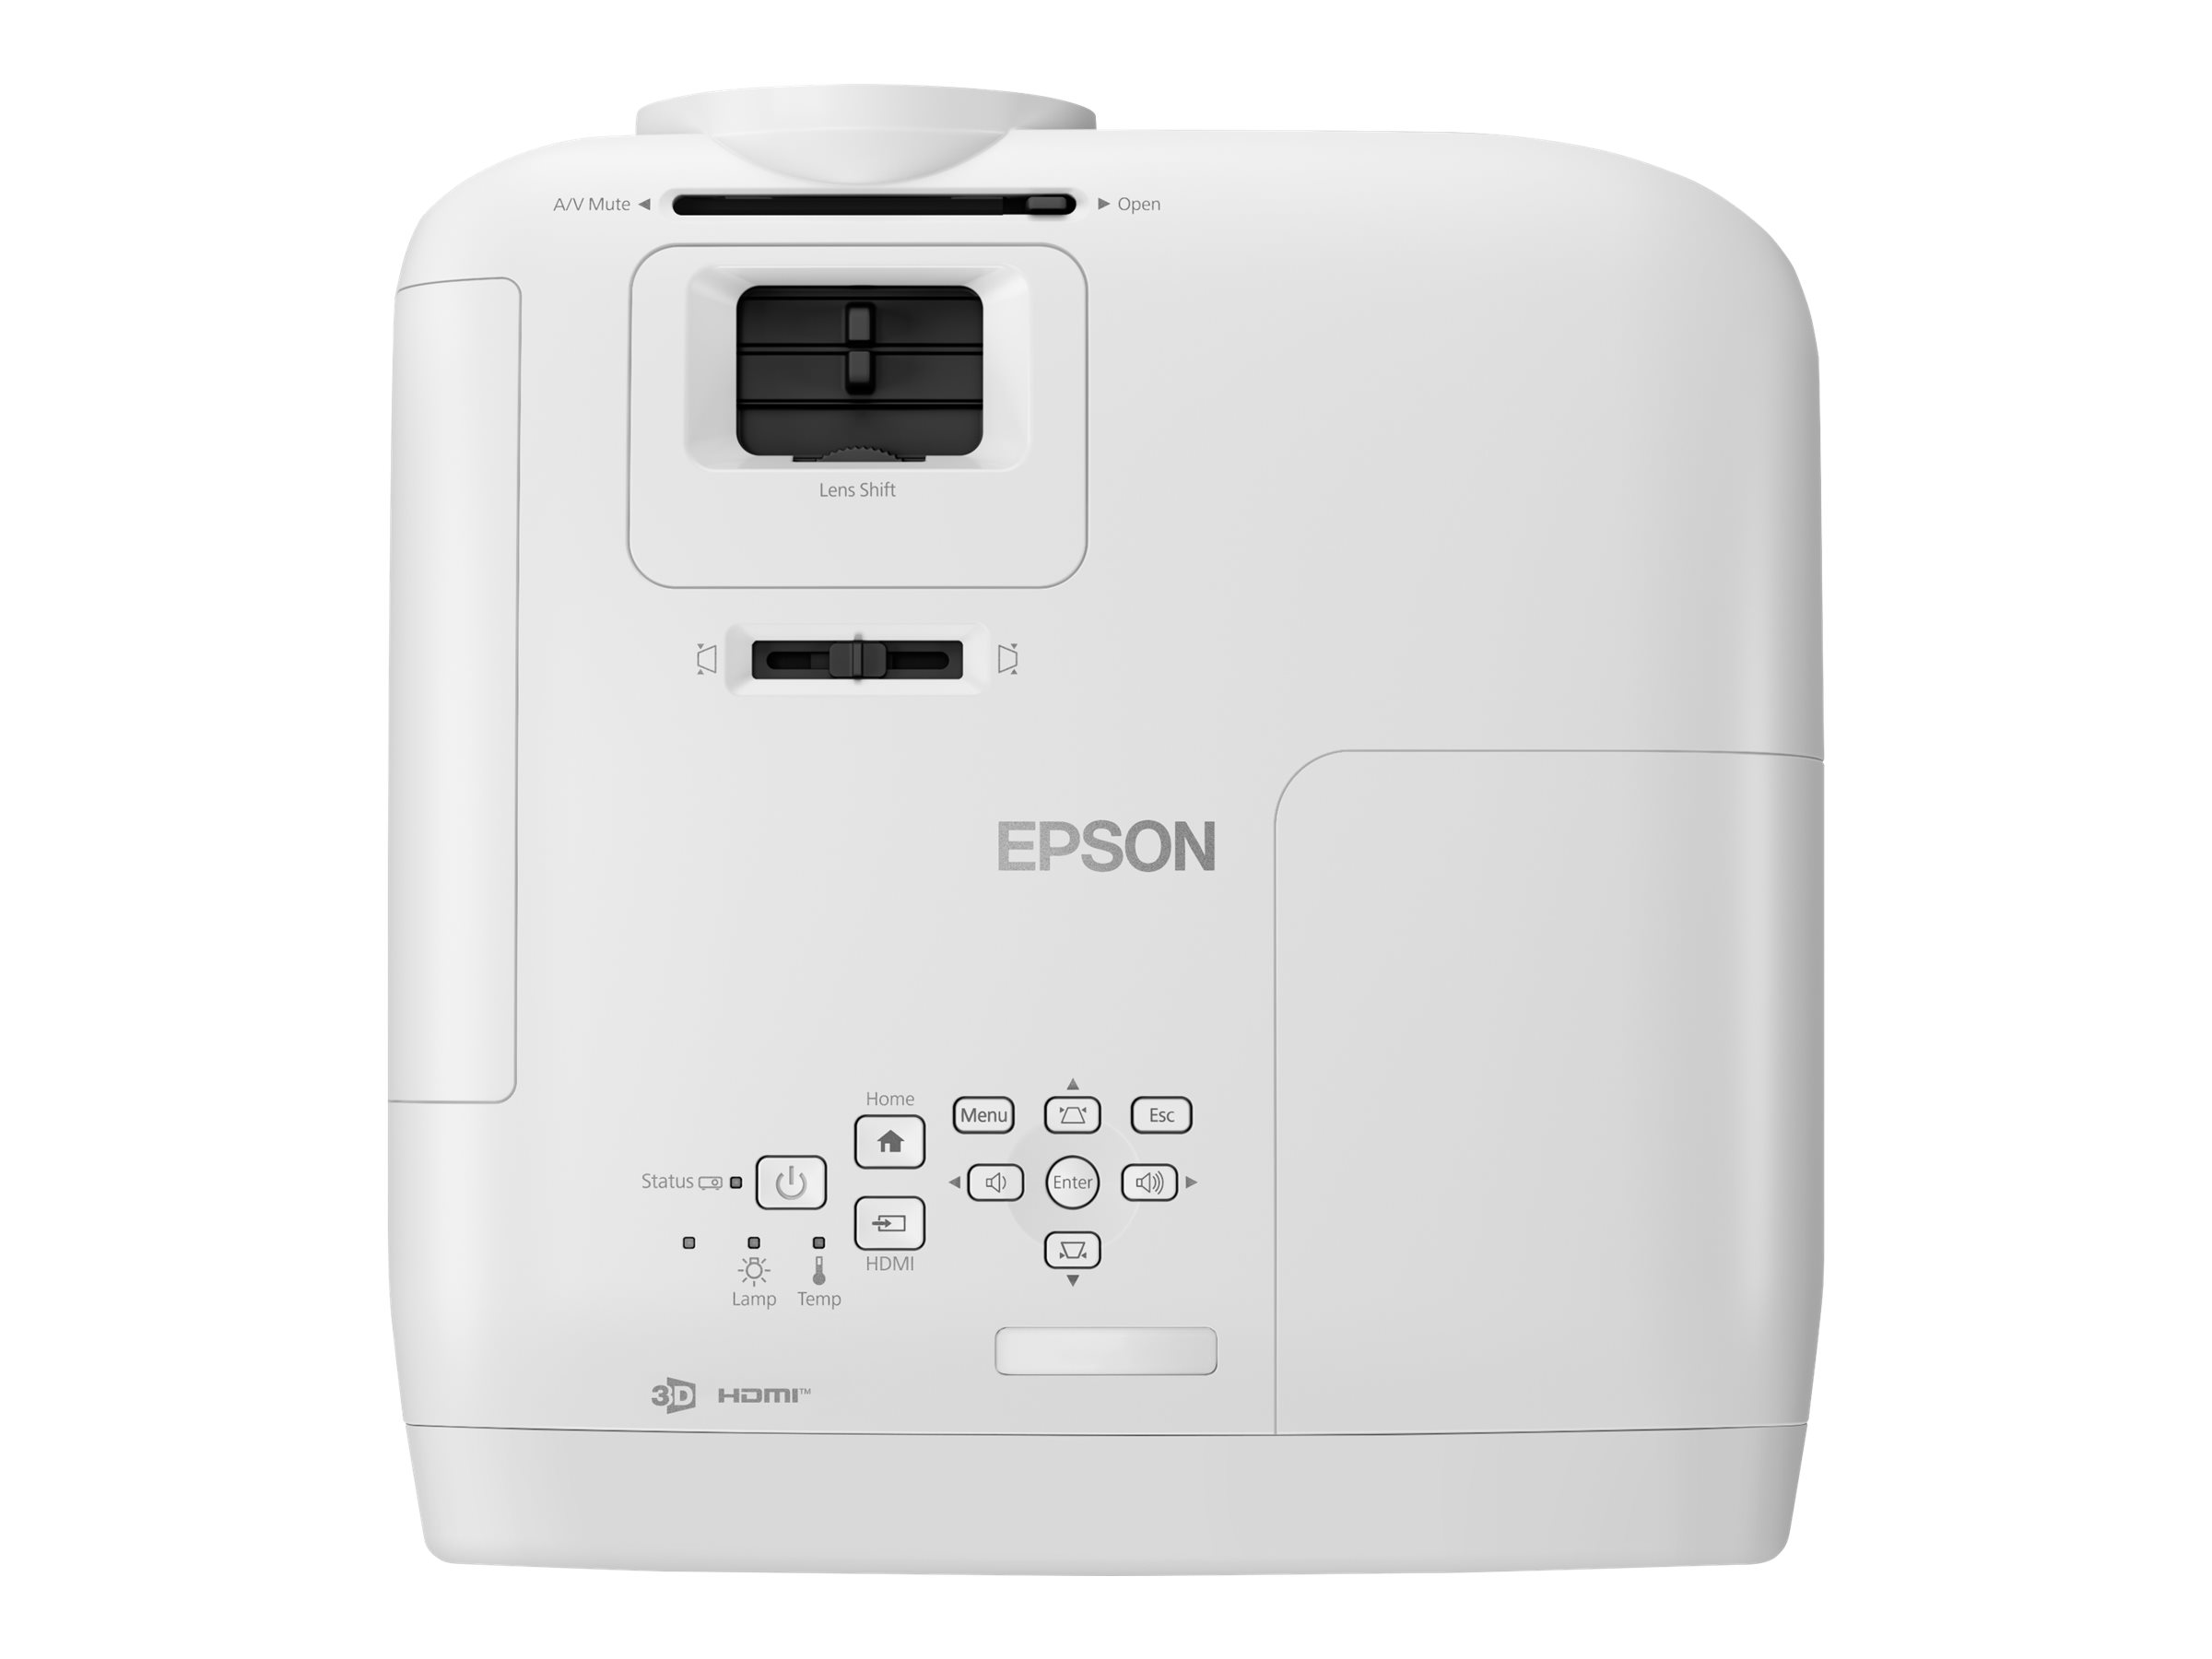 Epson EH-TW5820 - Projecteur 3LCD - 3D - 2700 lumens (blanc) - 2700 lumens (couleur) - Full HD (1920 x 1080) - 16:9 - 1080p - blanc - Android TV - V11HA11040 - Projecteurs LCD